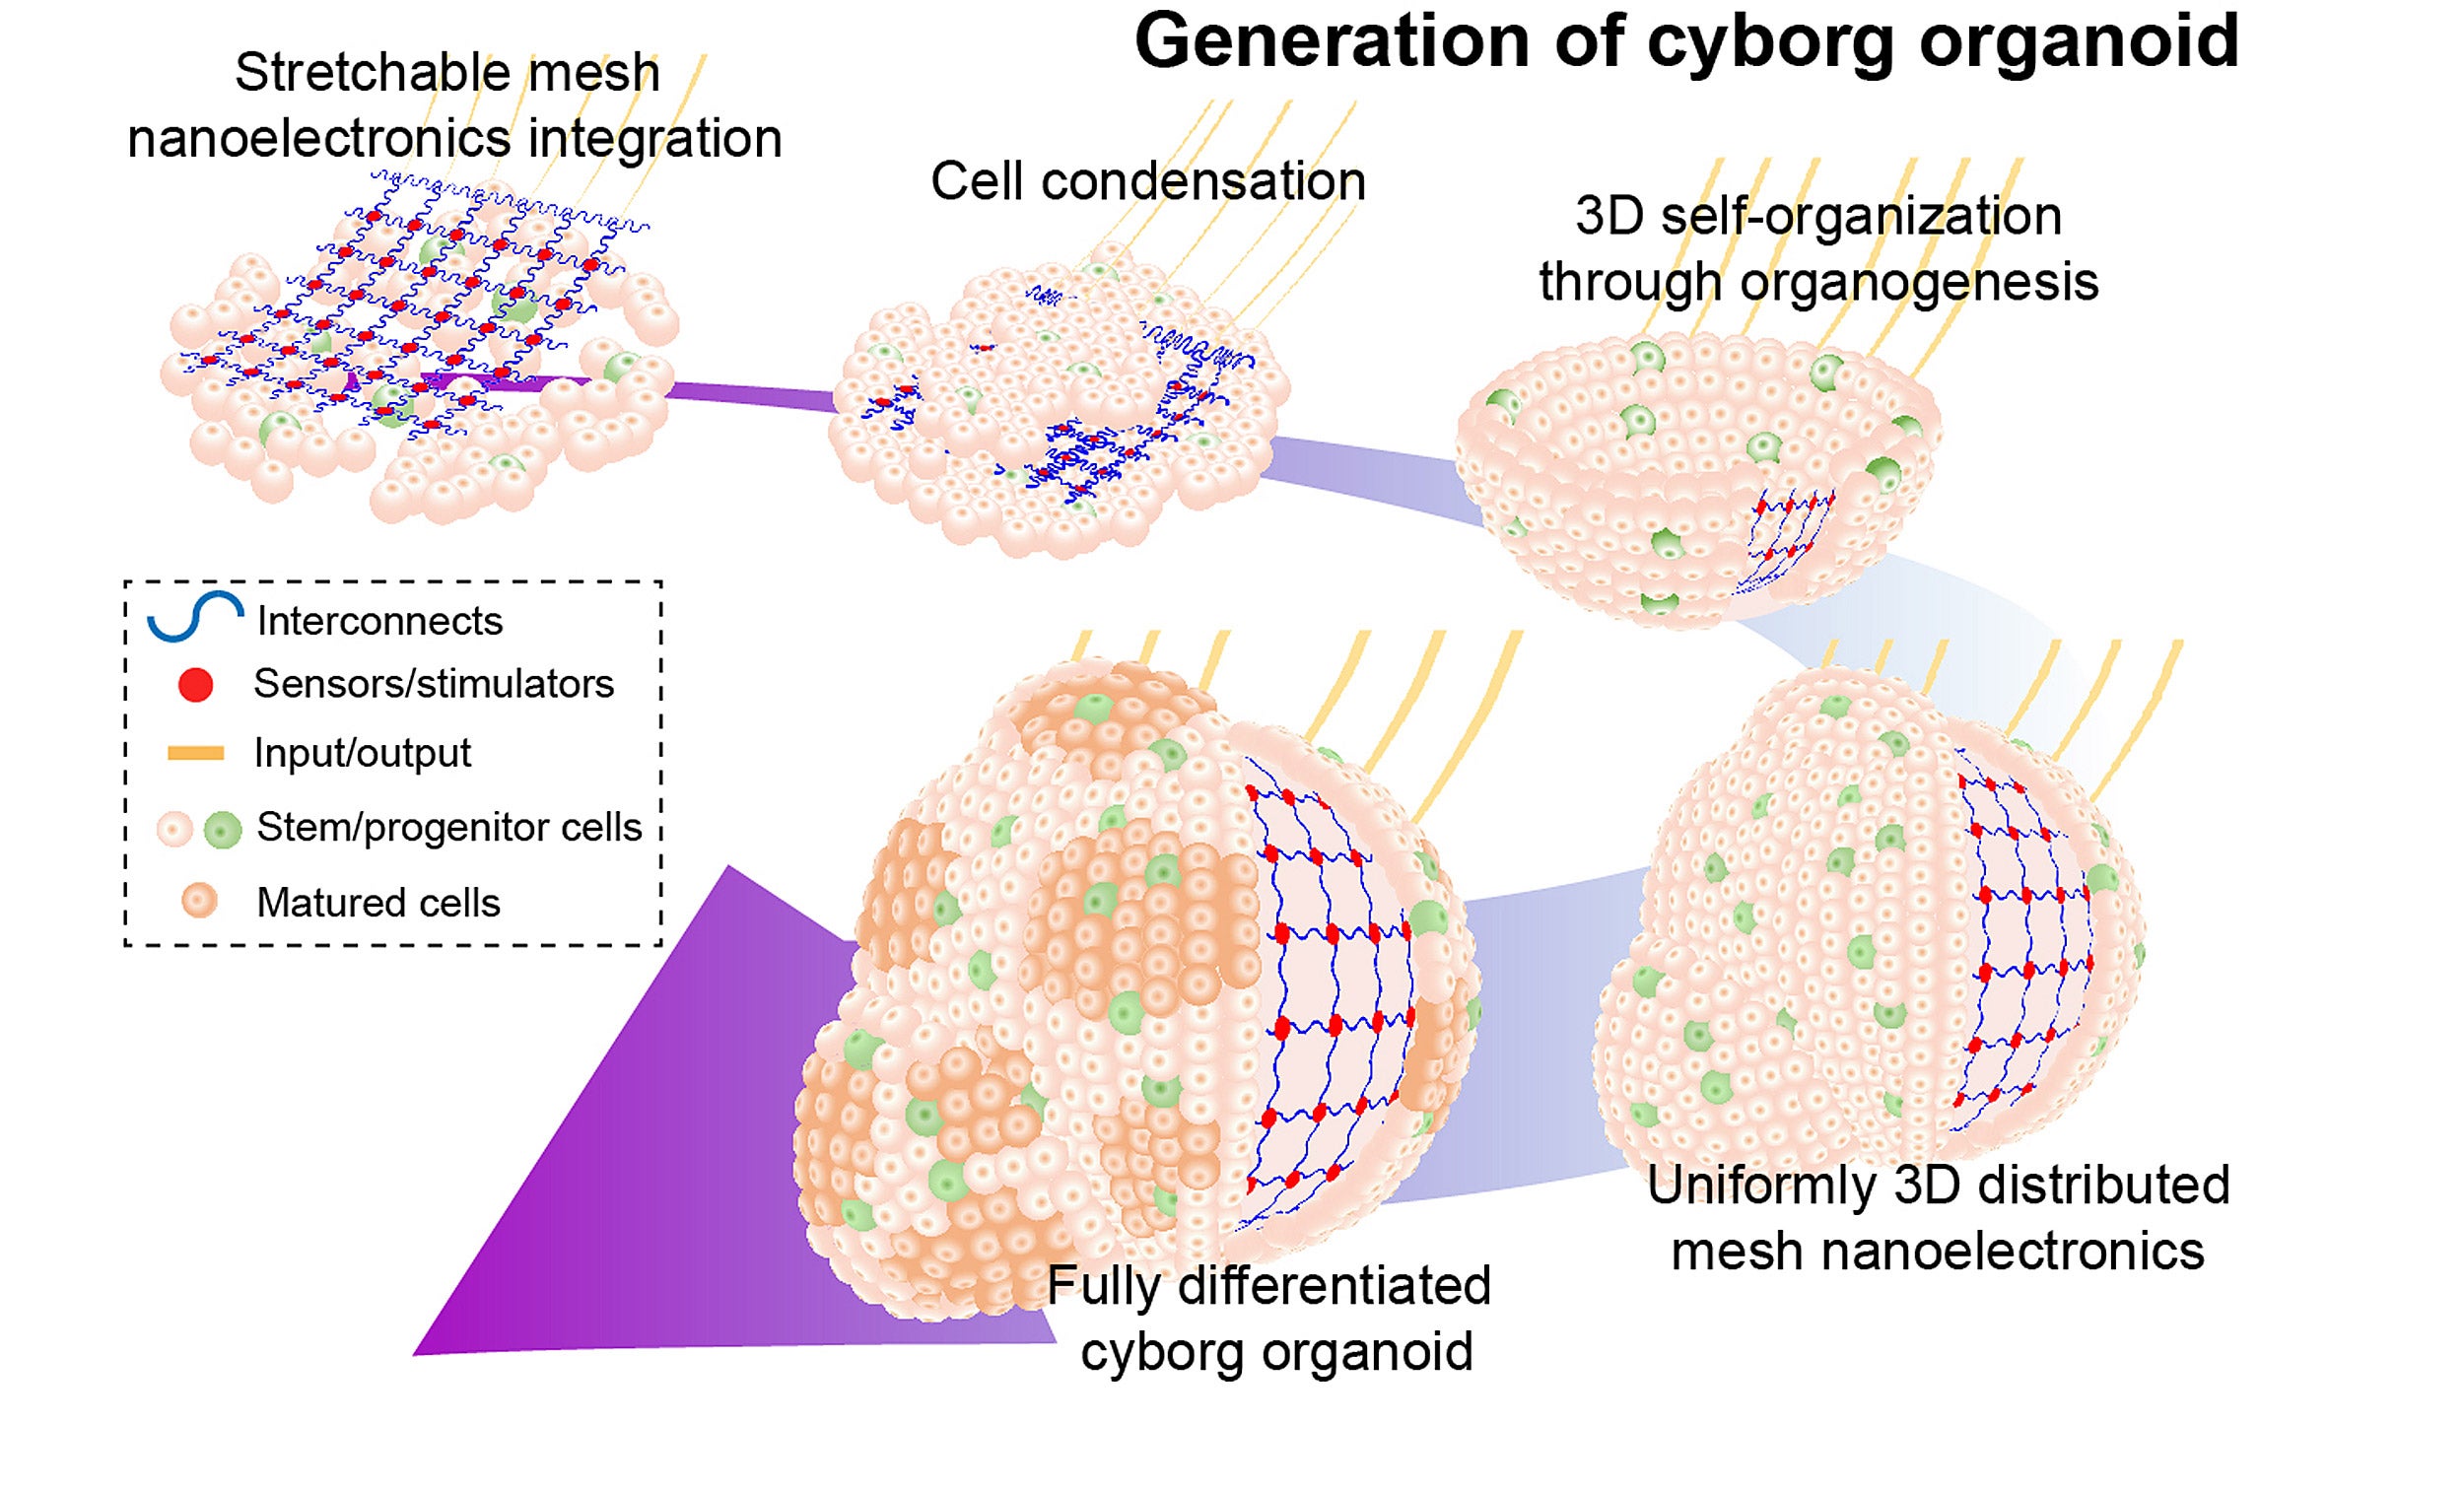 Generation of cyborg organoids, illustrated.